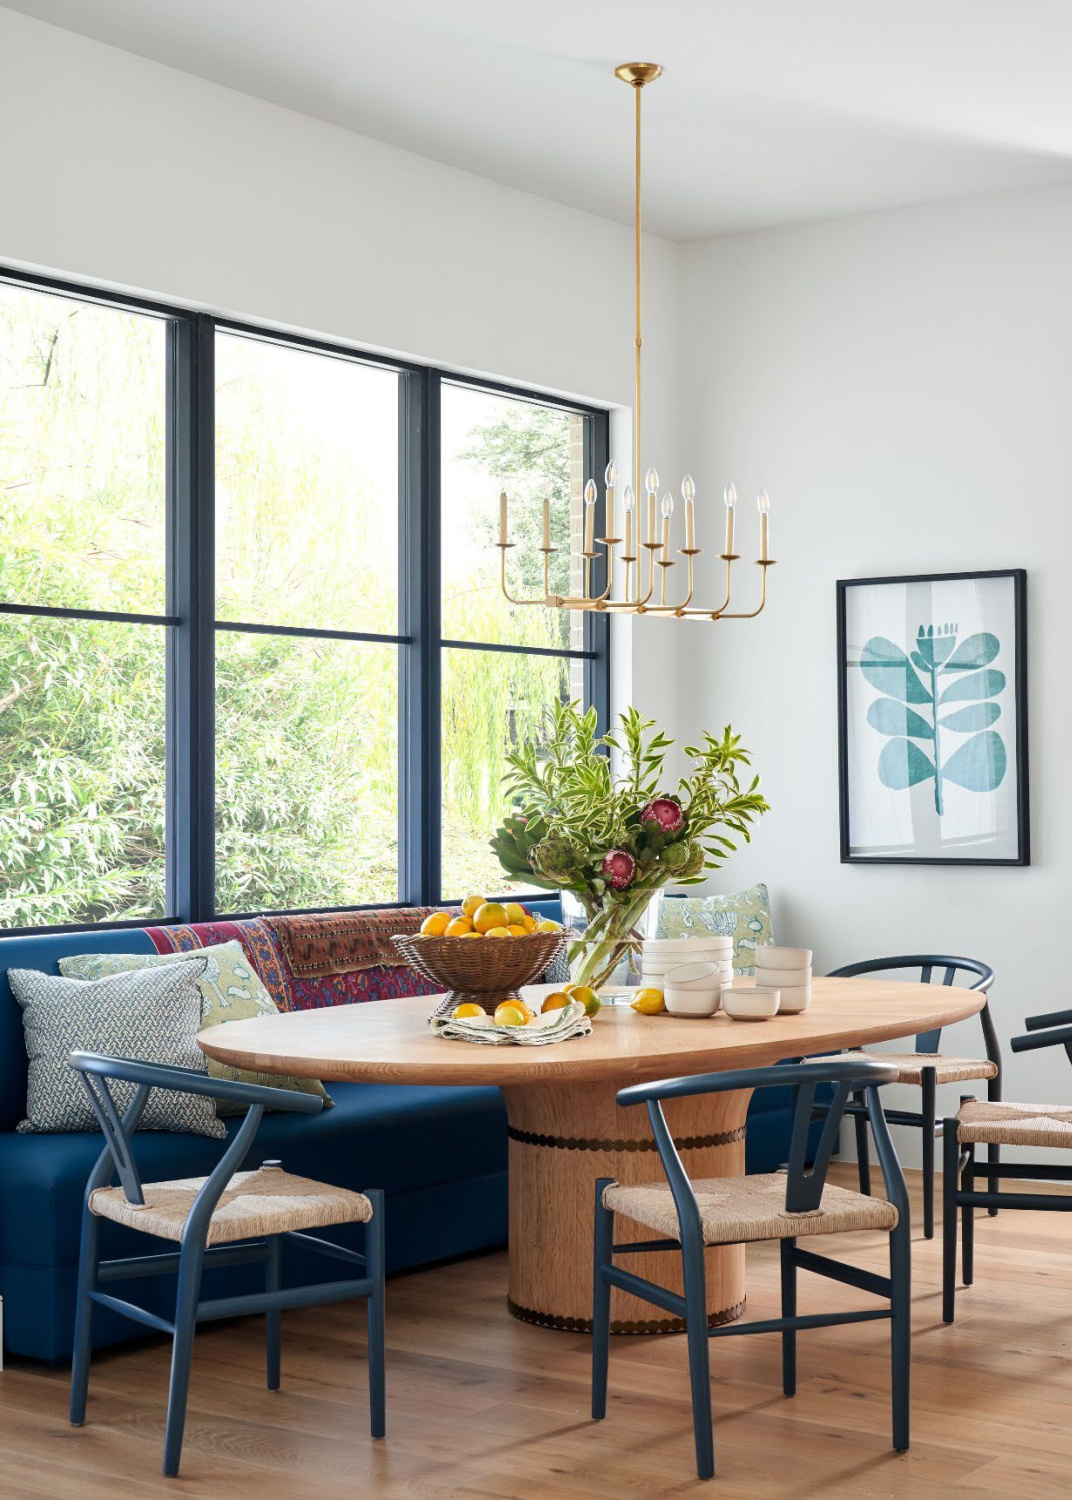 Kirsten Mullen designed breakfast nook with  bright blue banquette and wishbone chairs in Frederic Magazine. #breakfastnook